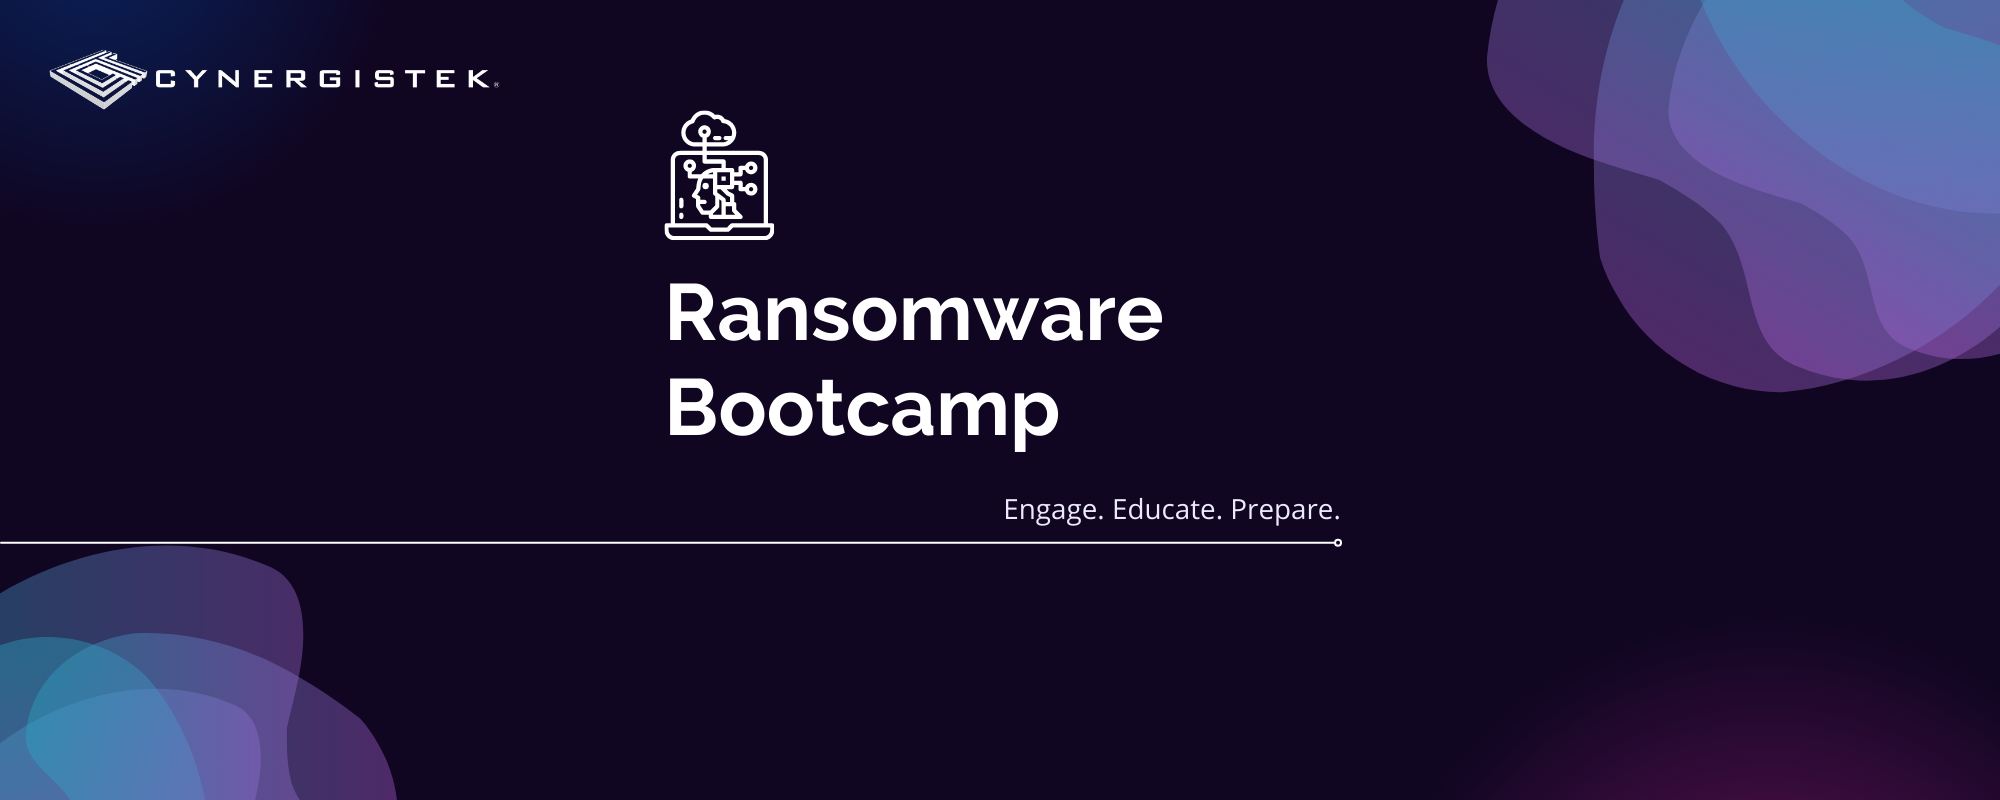 Ransomware Bootcamp